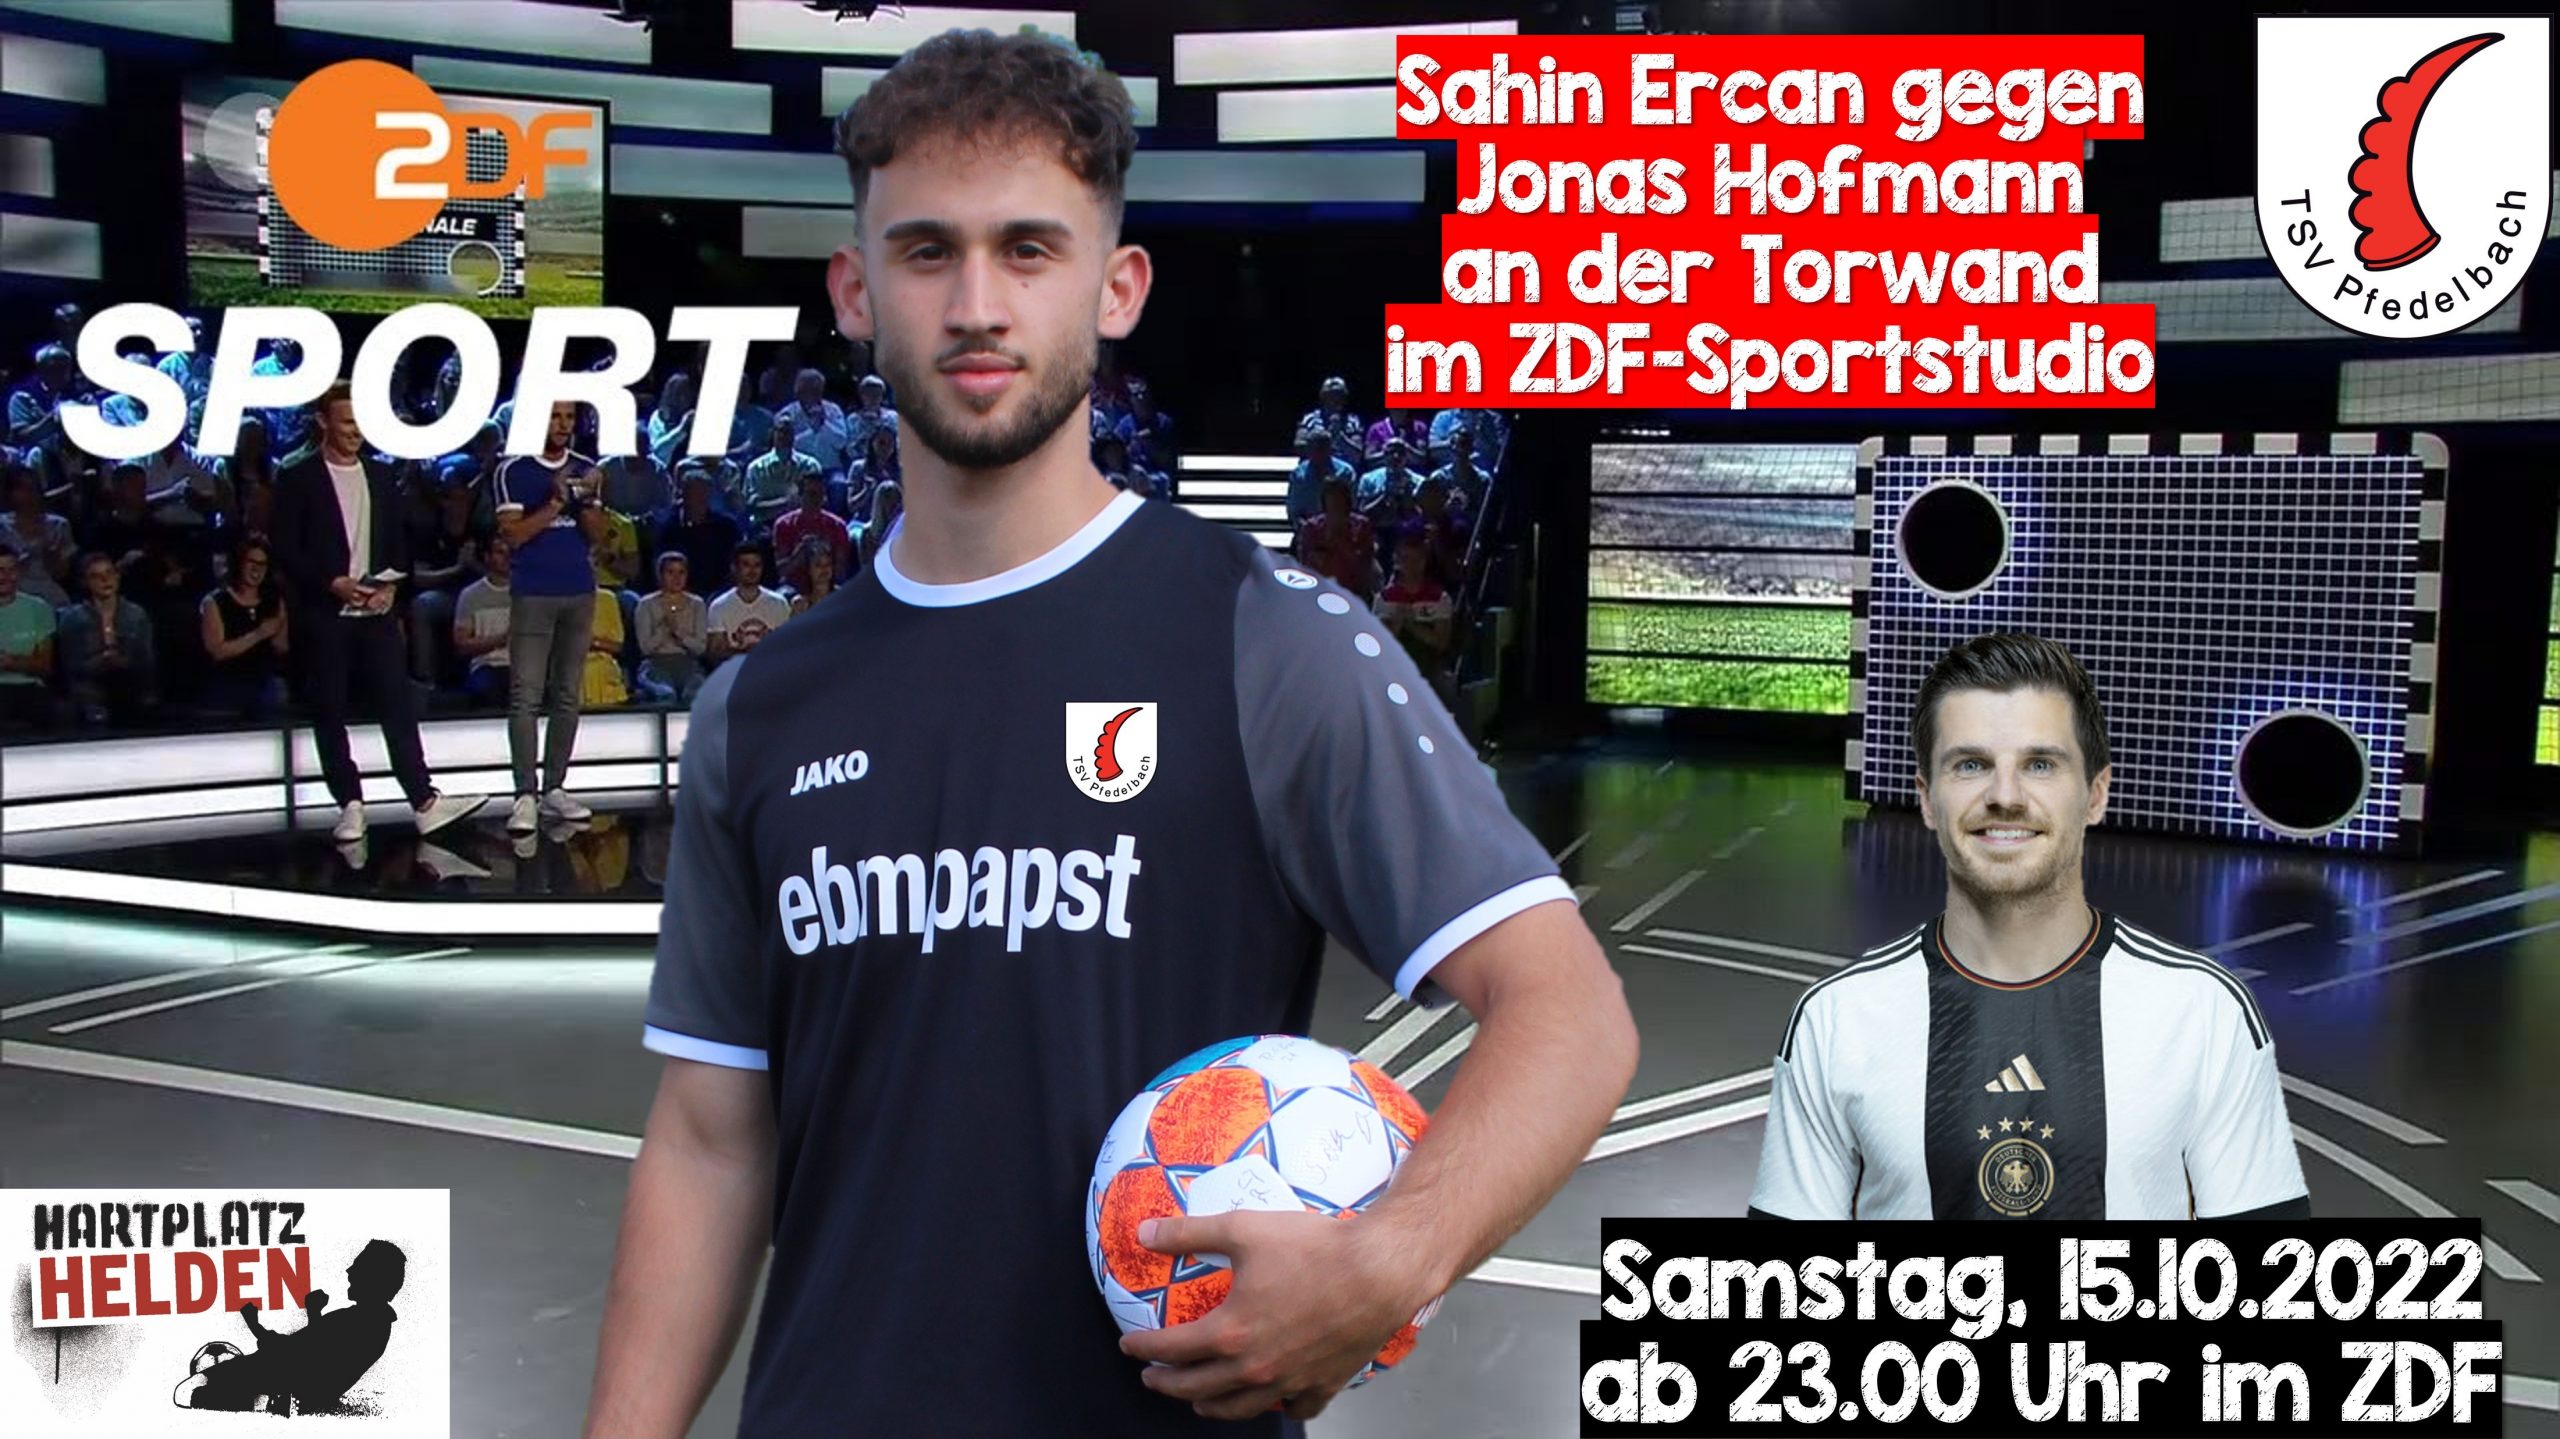 Sahin Ercan am Samstag an der Torwand im ZDF Sportstudio!!!